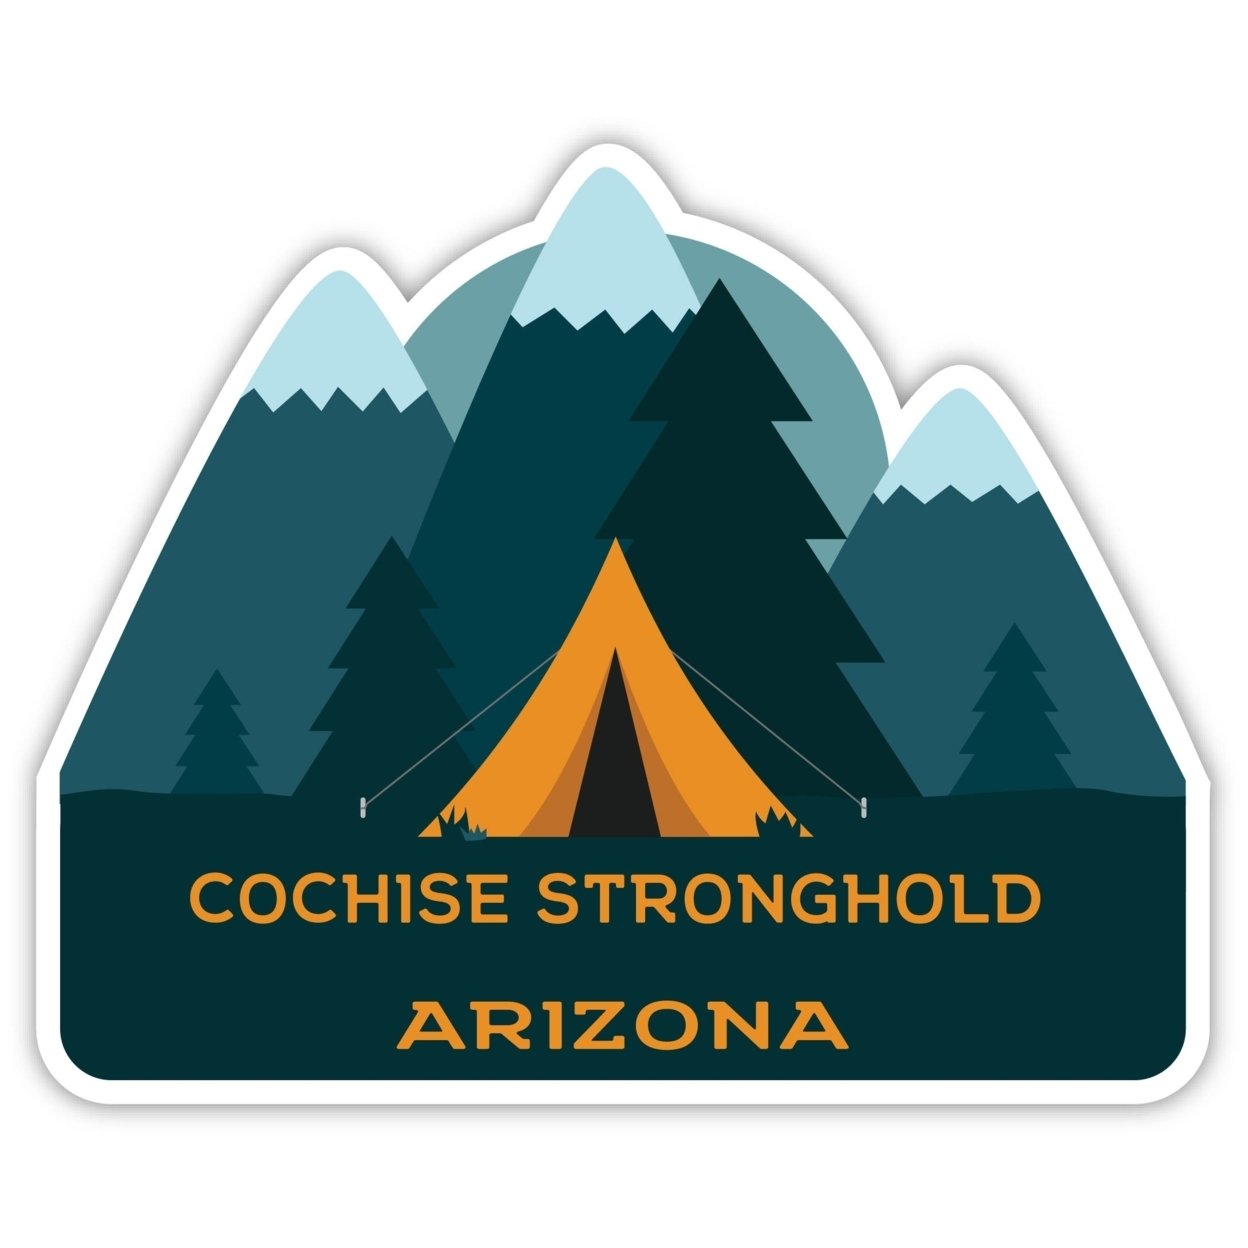 Cochise Stronghold Arizona Souvenir Decorative Stickers (Choose Theme And Size) - Single Unit, 10-Inch, Tent